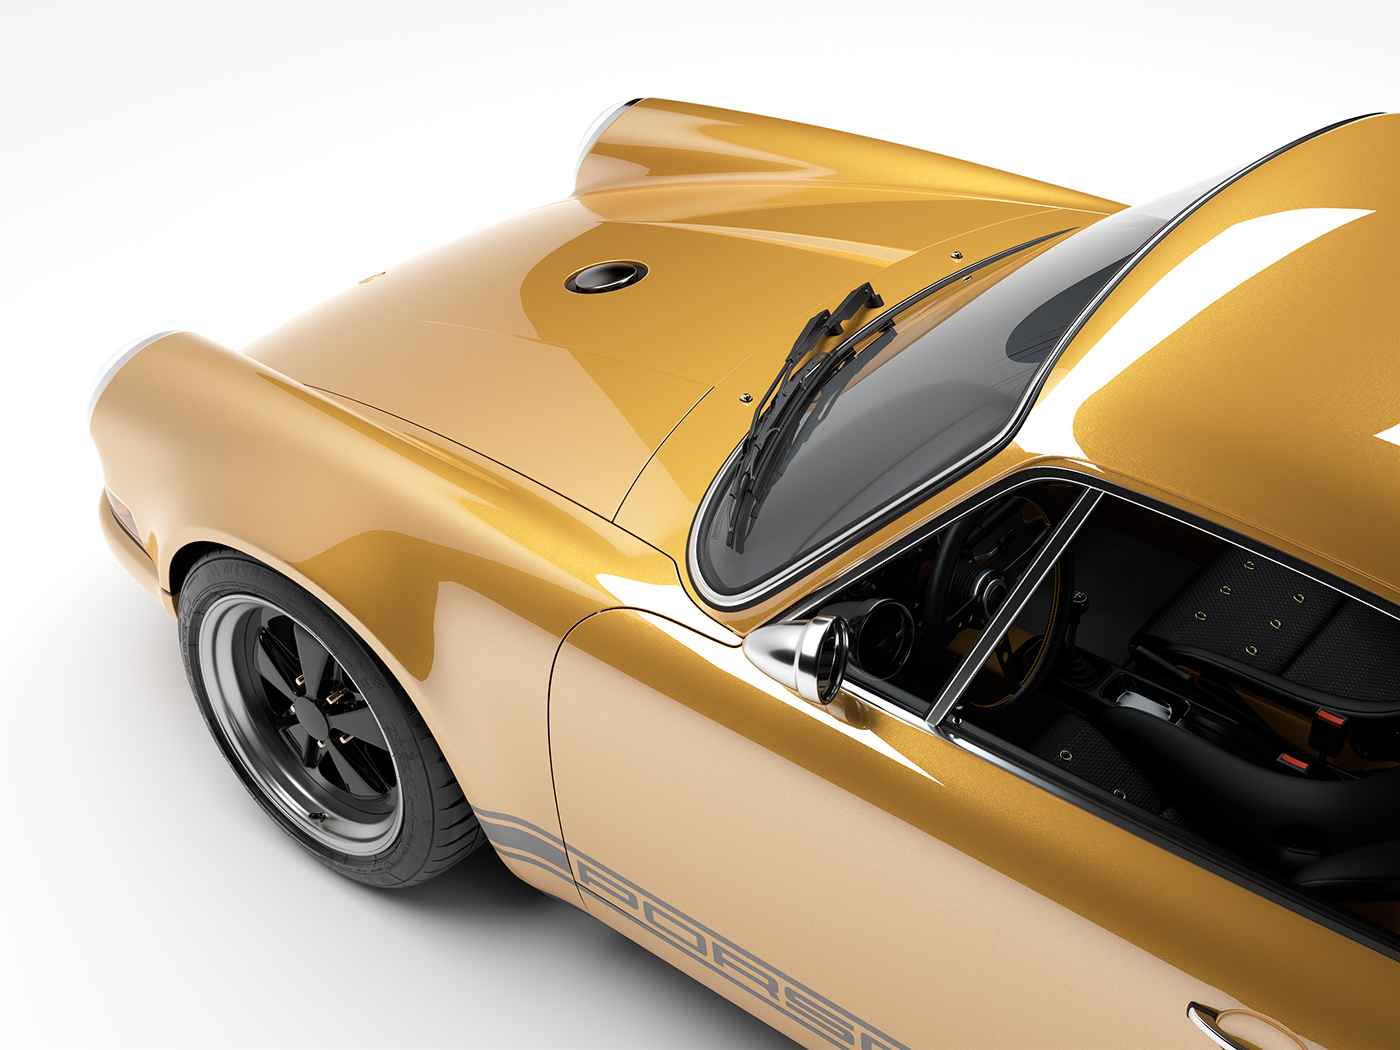 3D CG CGI visualization visualisation product automotive   car Render freelancer